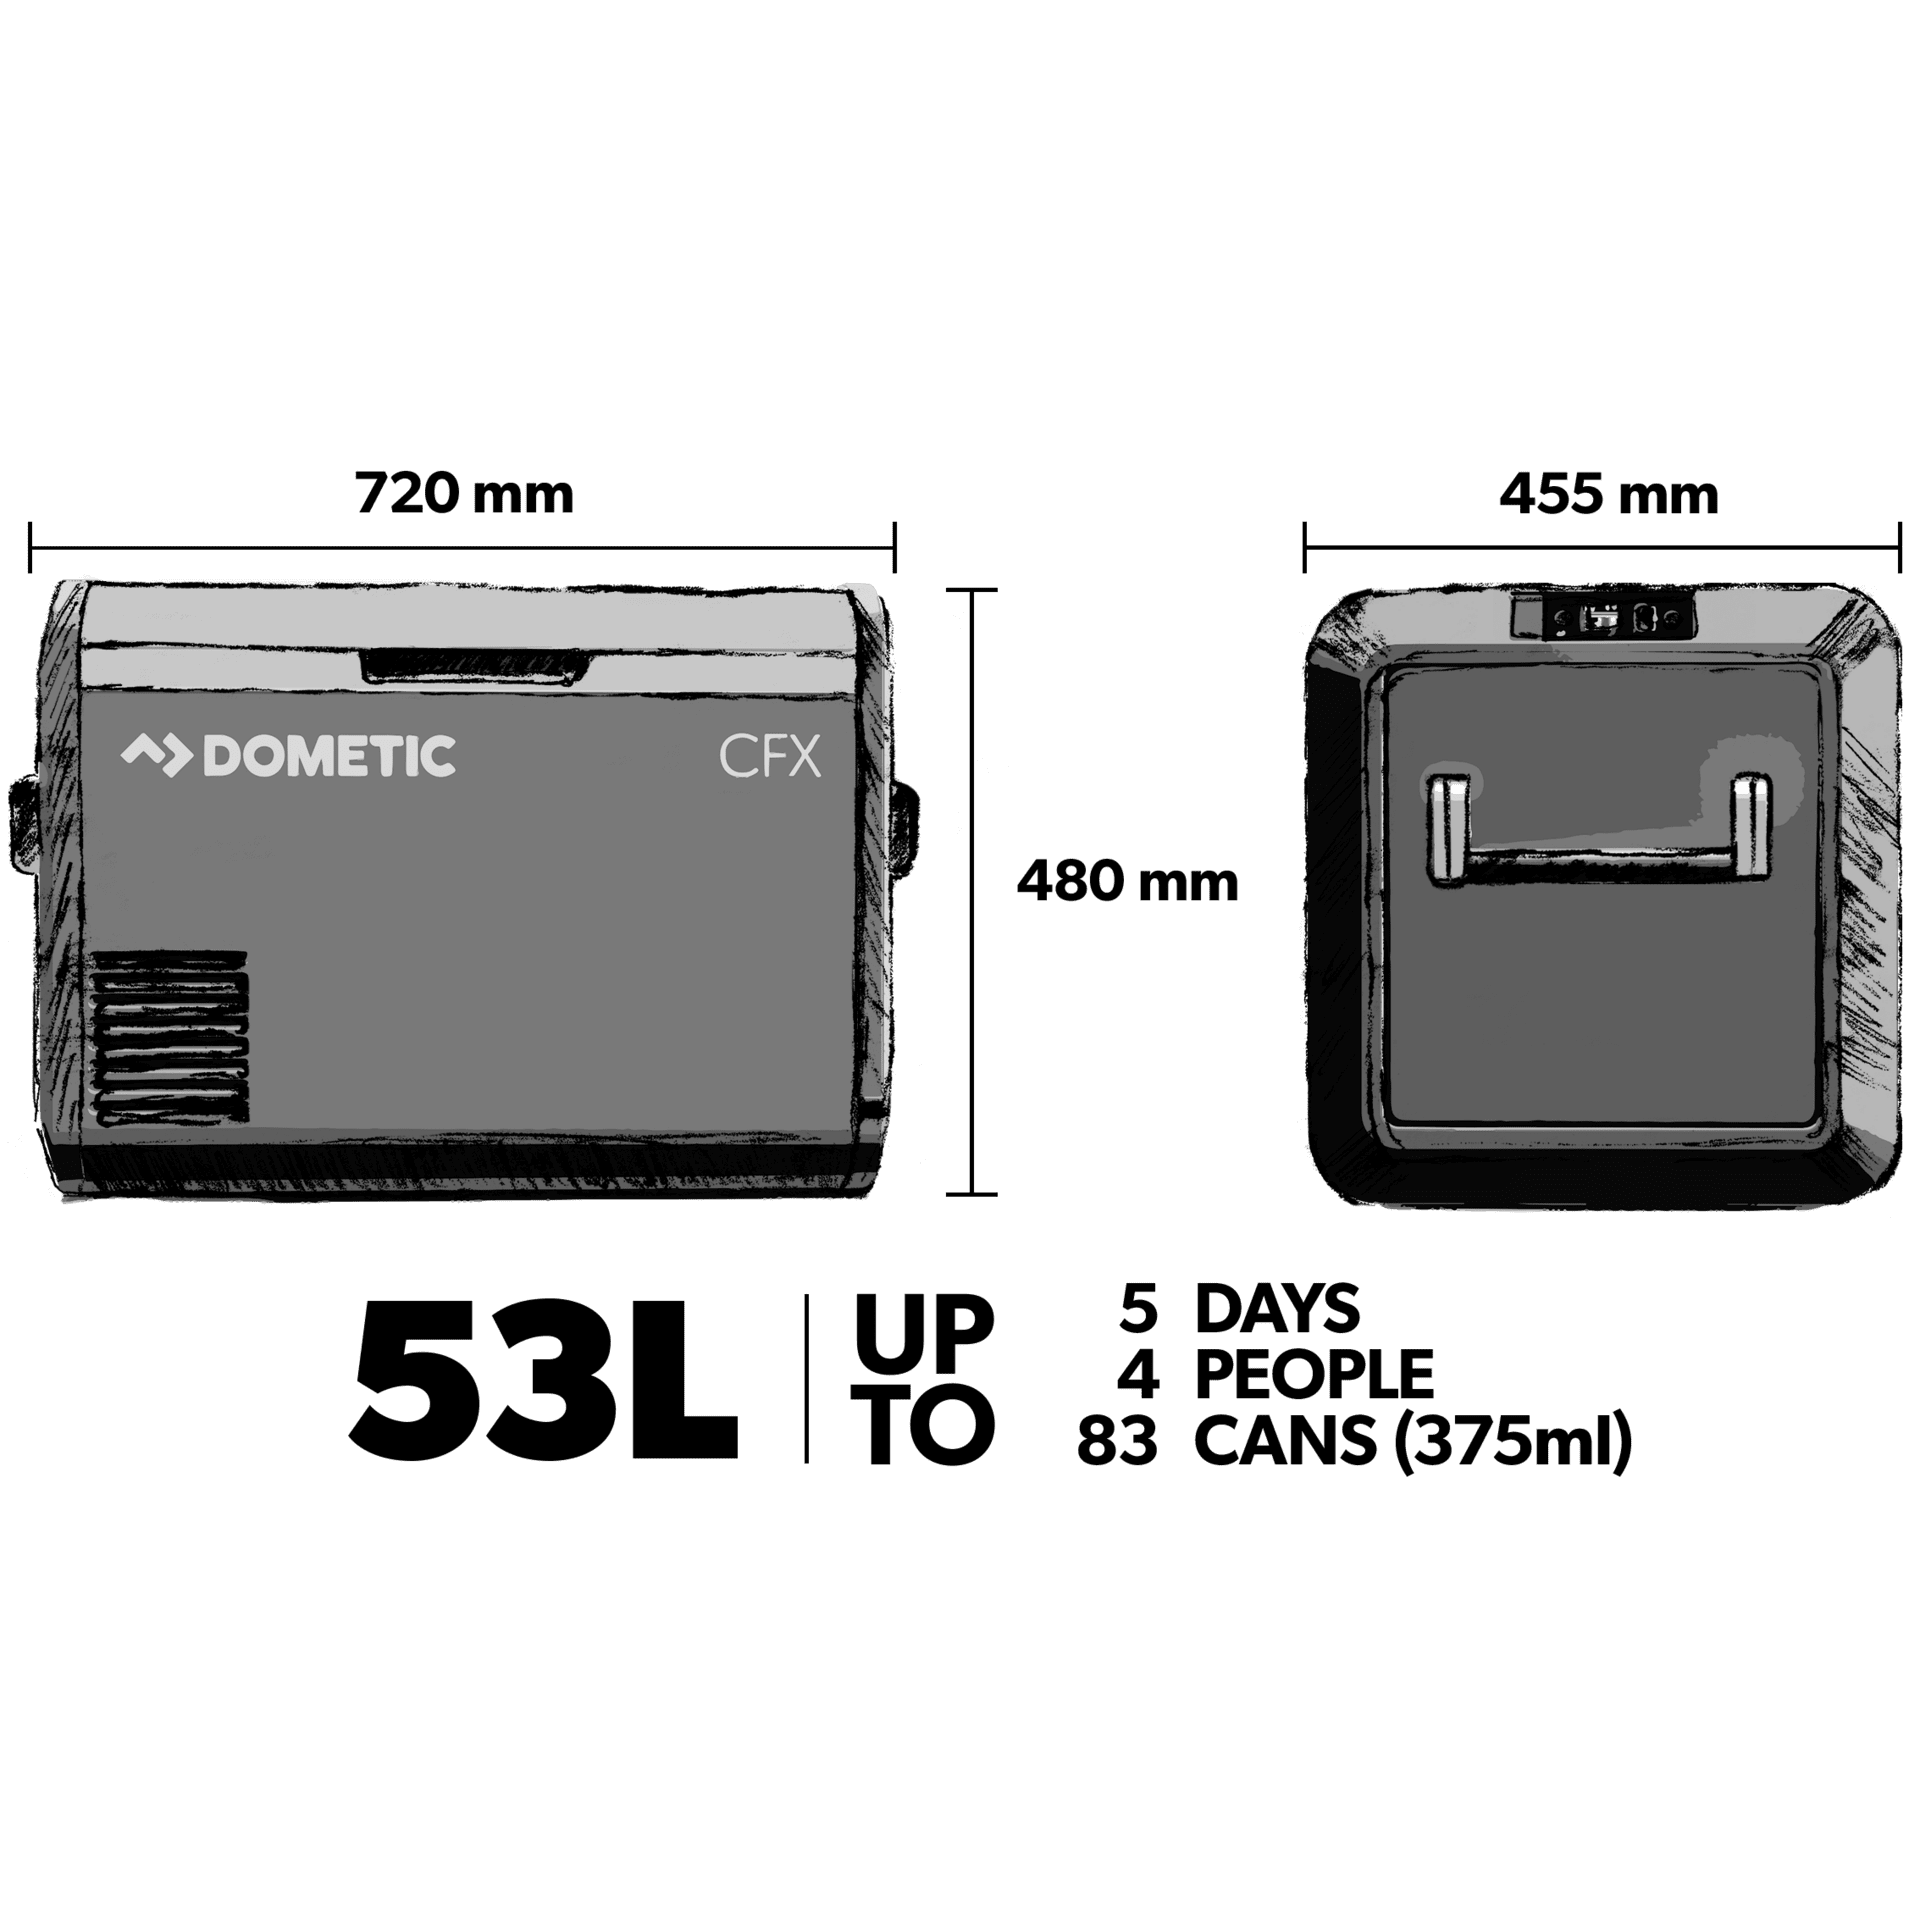 Dometic CFX3 55IM - Portable fridge and ice maker, or freezer, 53 l